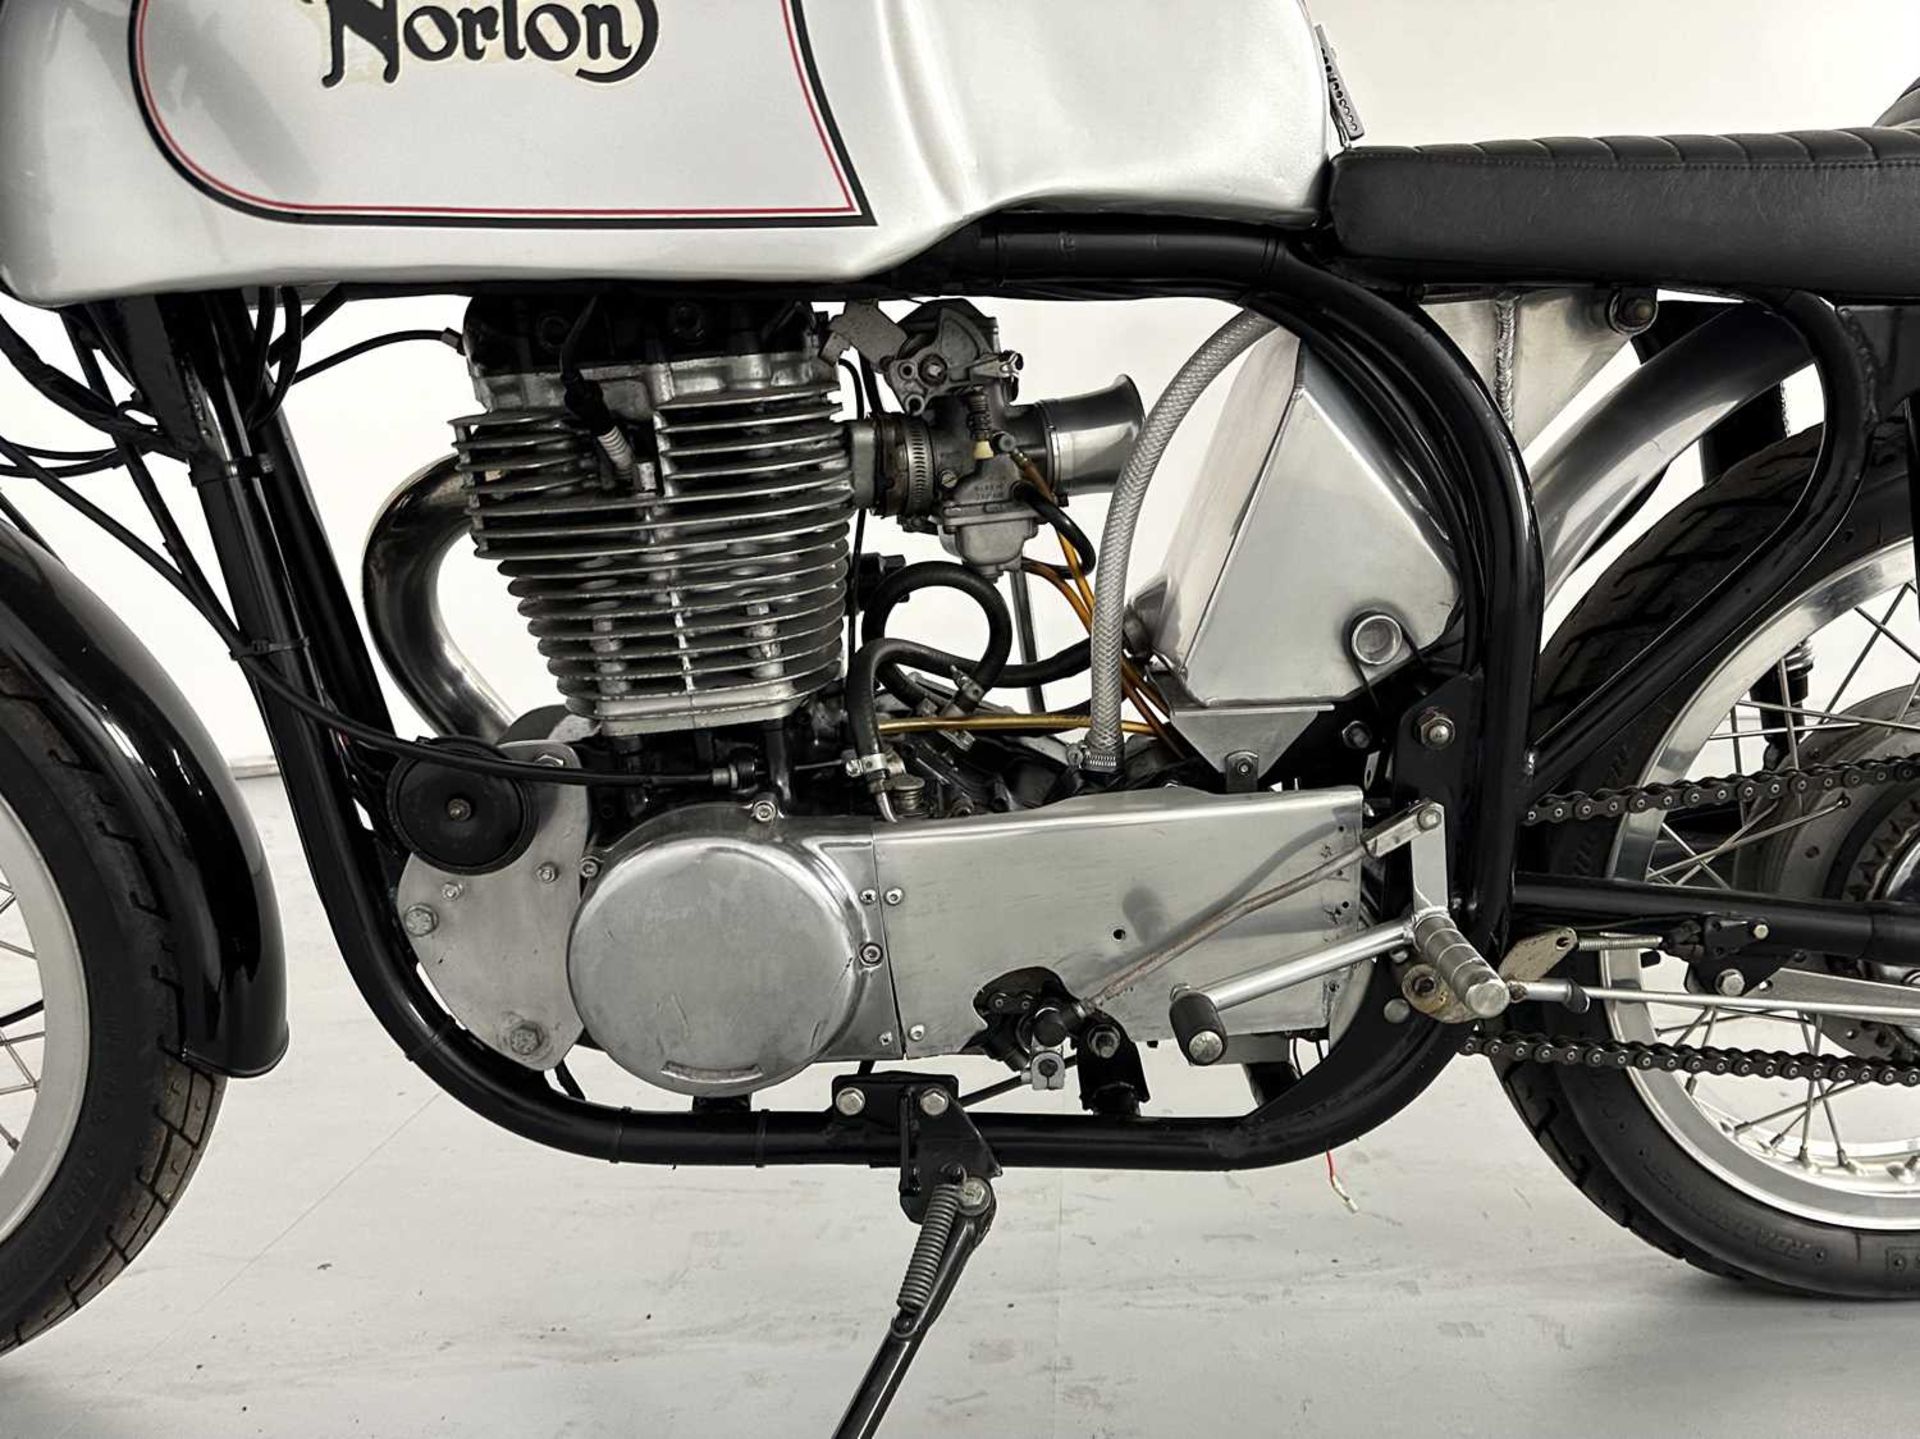 1964 Norton Manx 500cc - Image 15 of 22